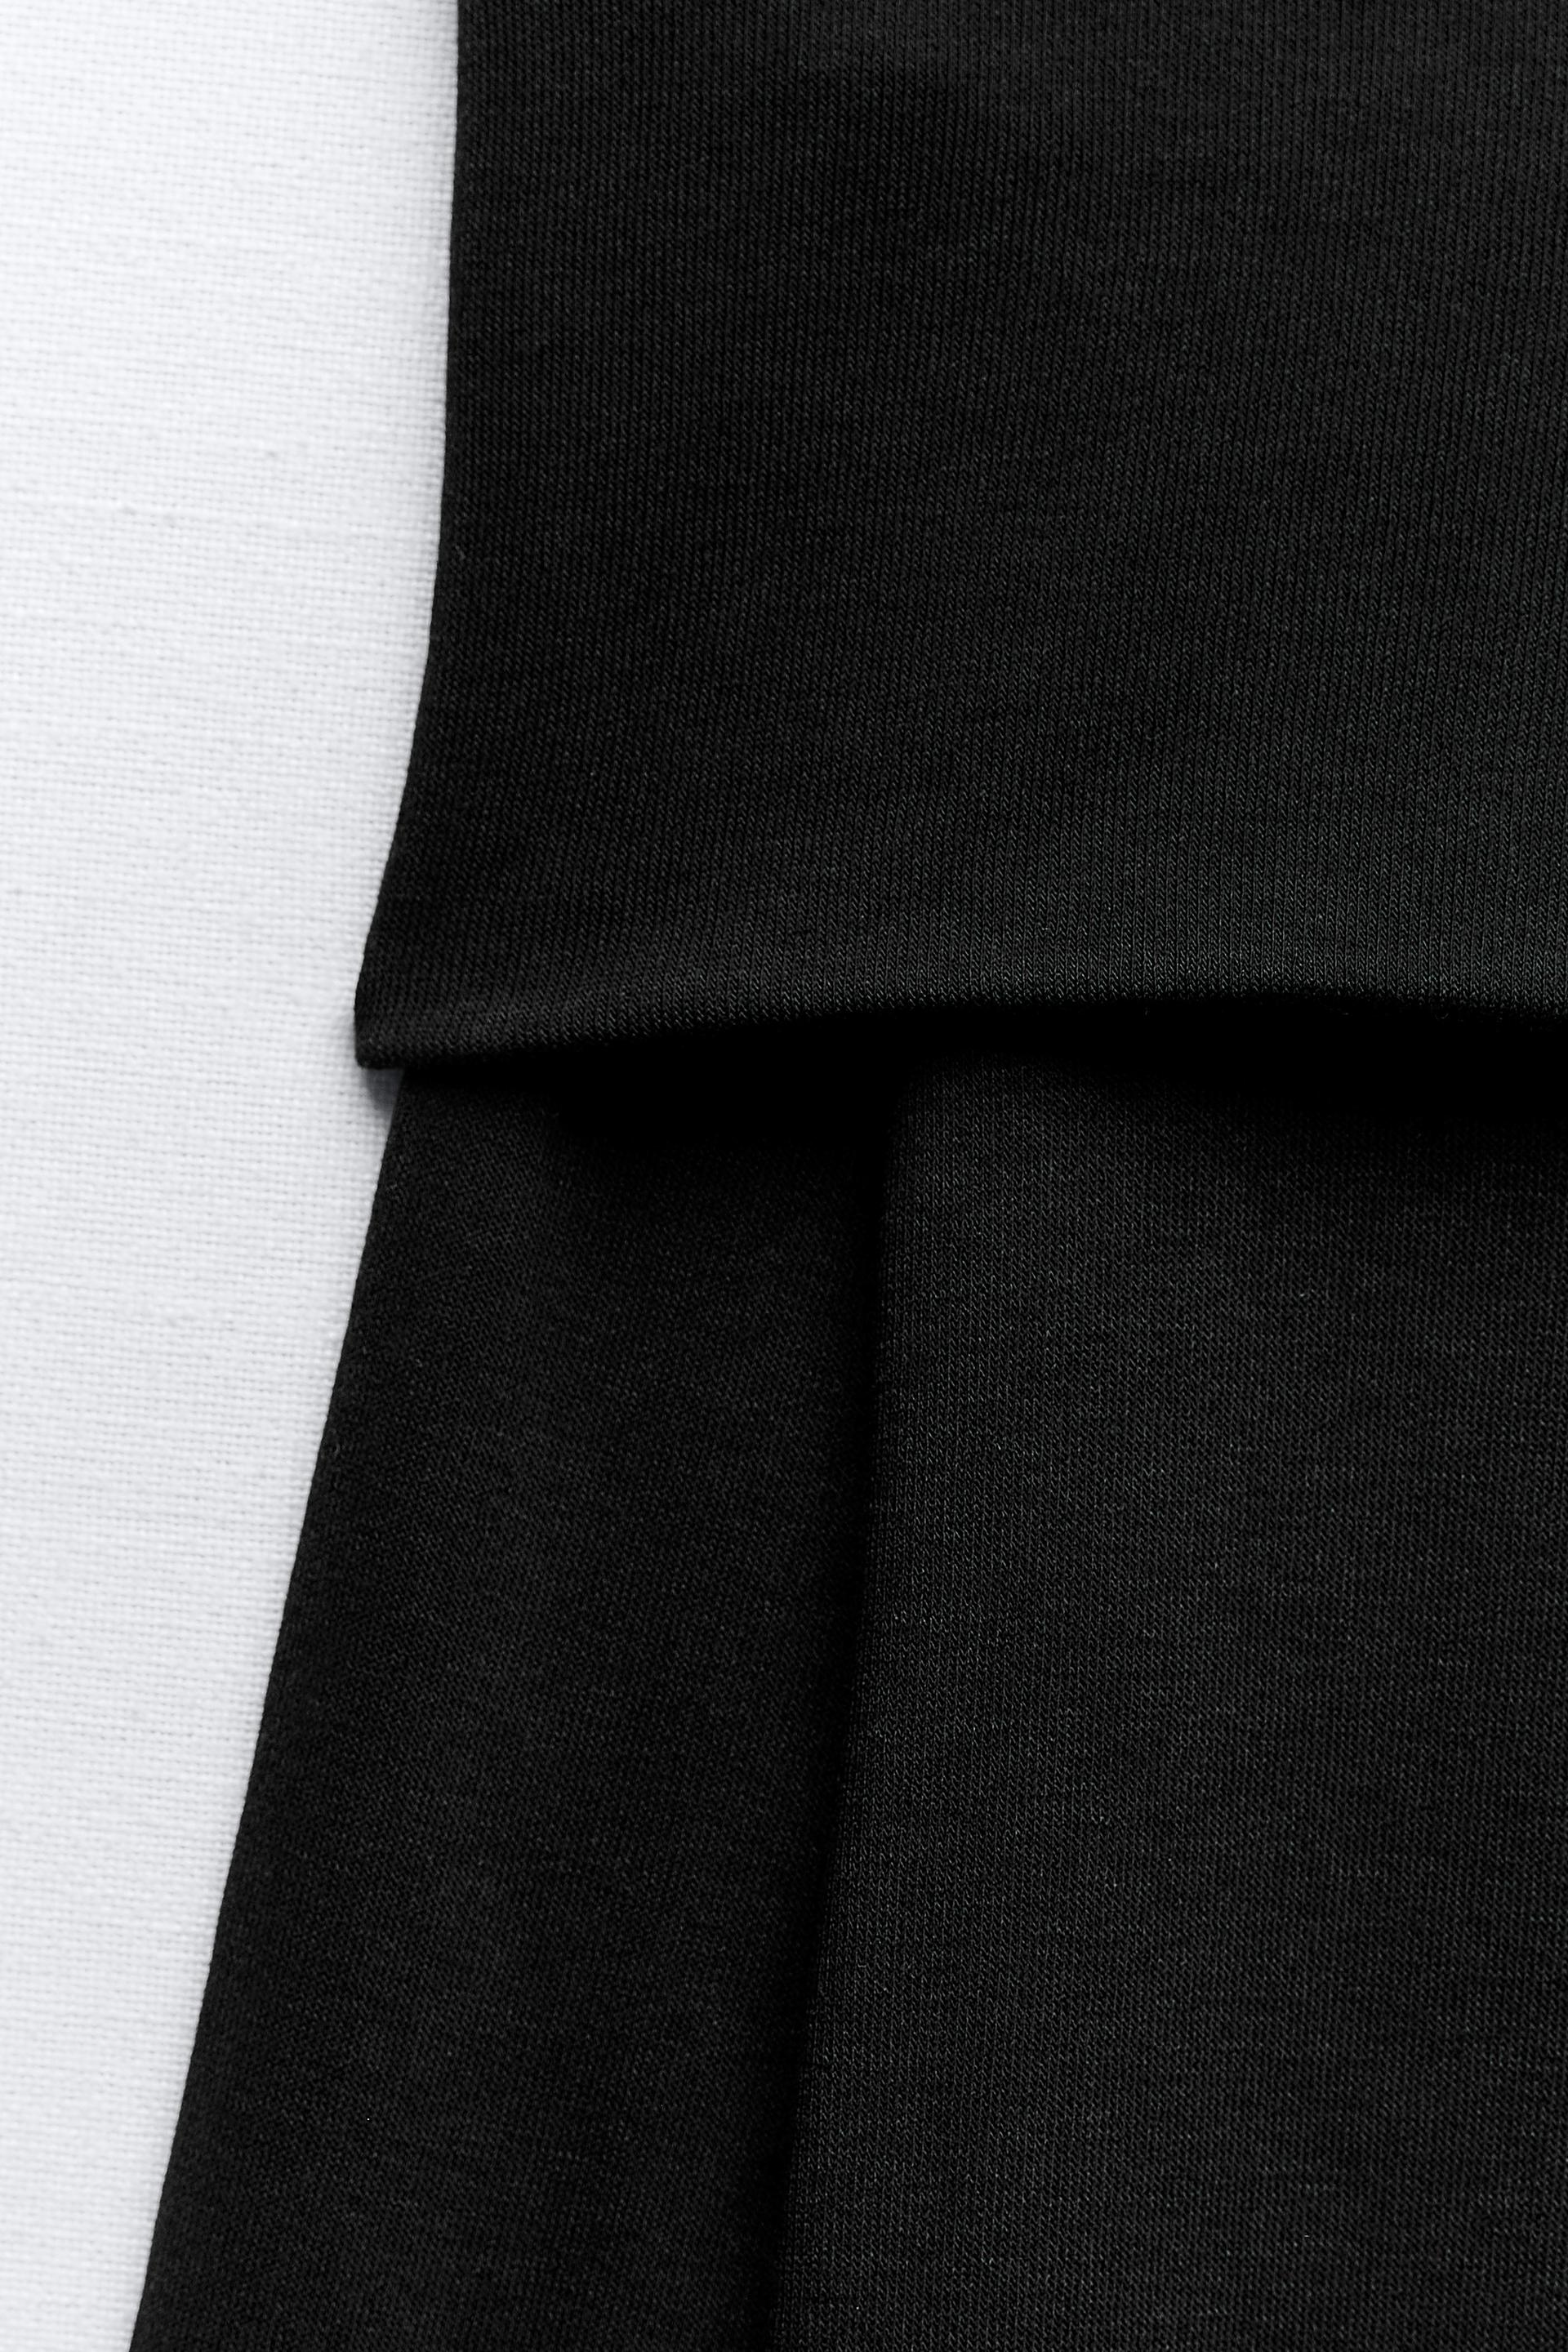 COTTON STRAPLESS DRESS MODEL 3 - RULA - BLACK